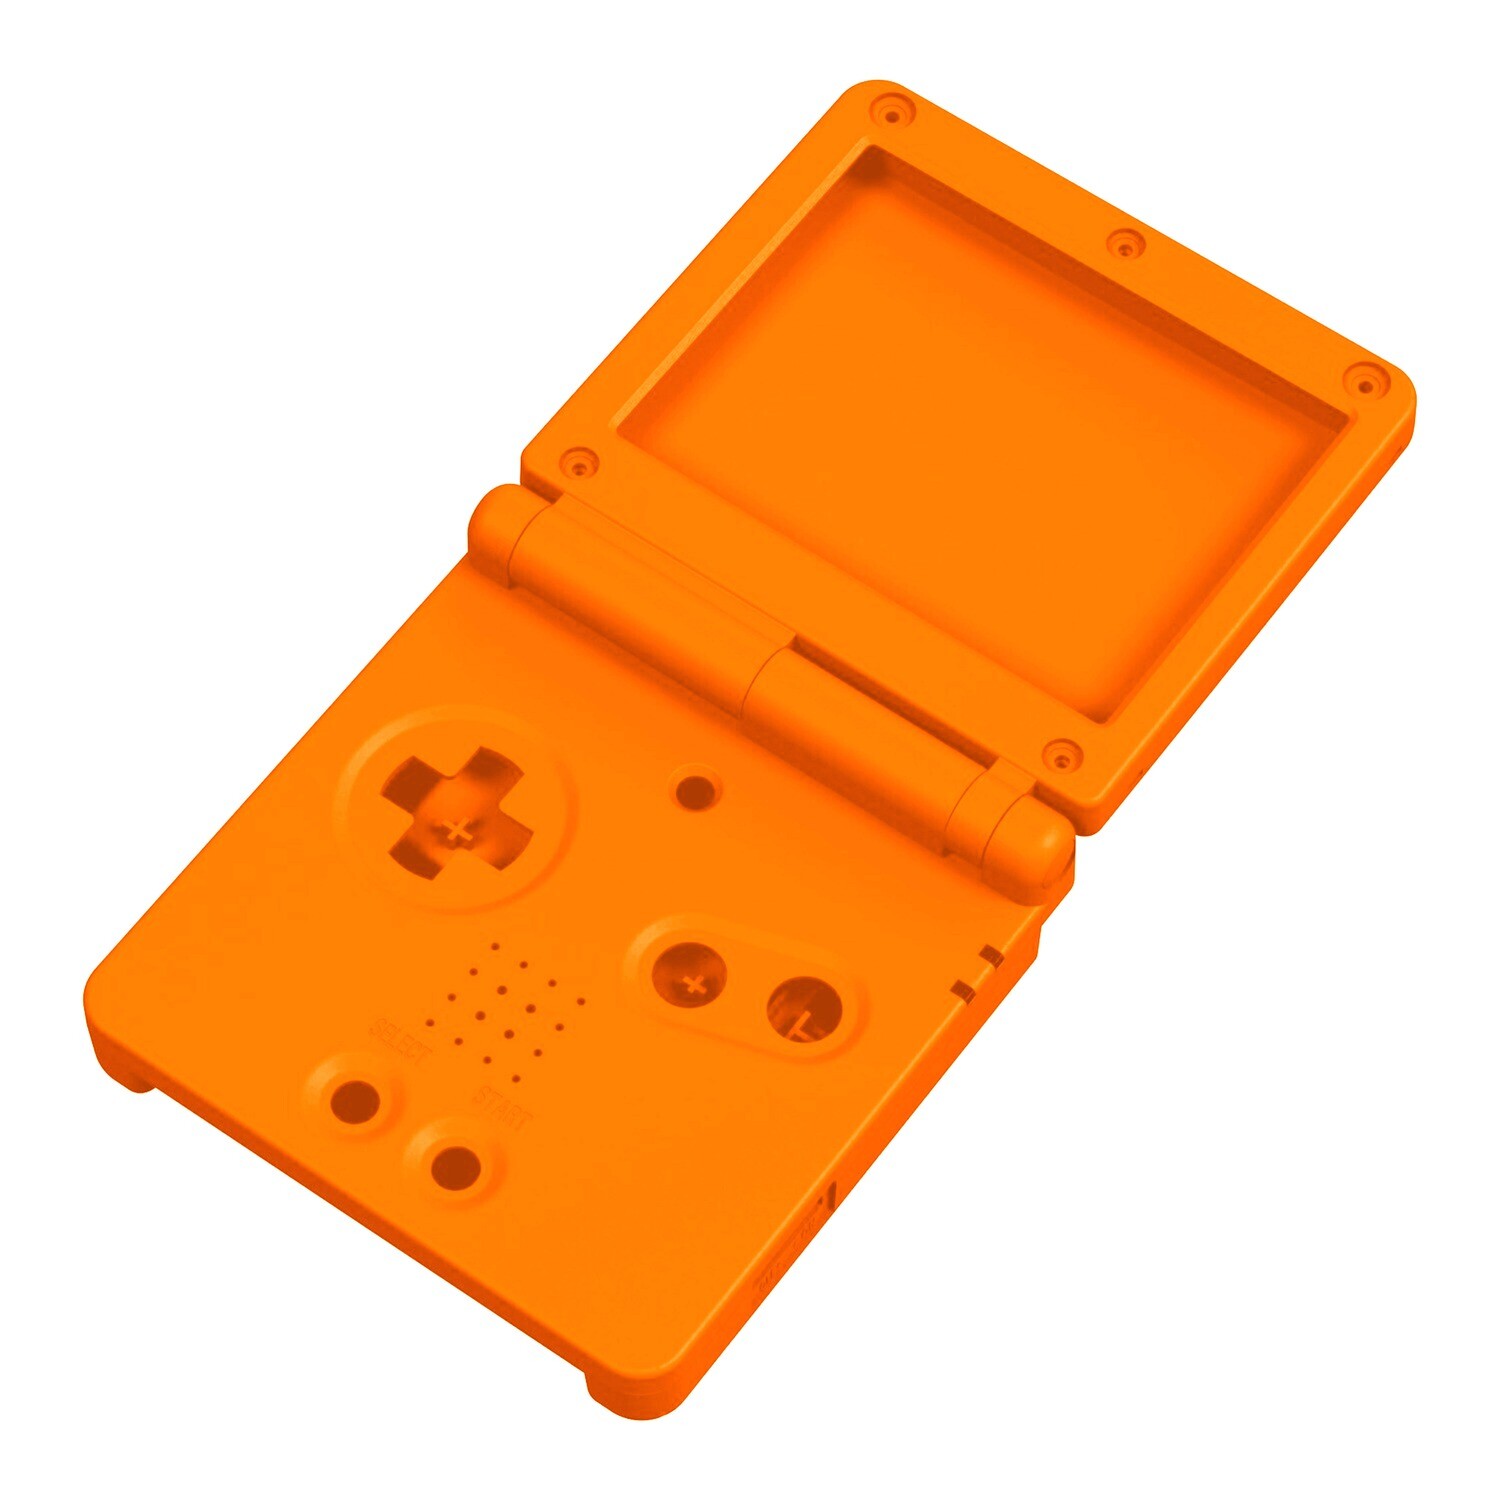 Game Boy Advance SP Shell (Solid Orange)